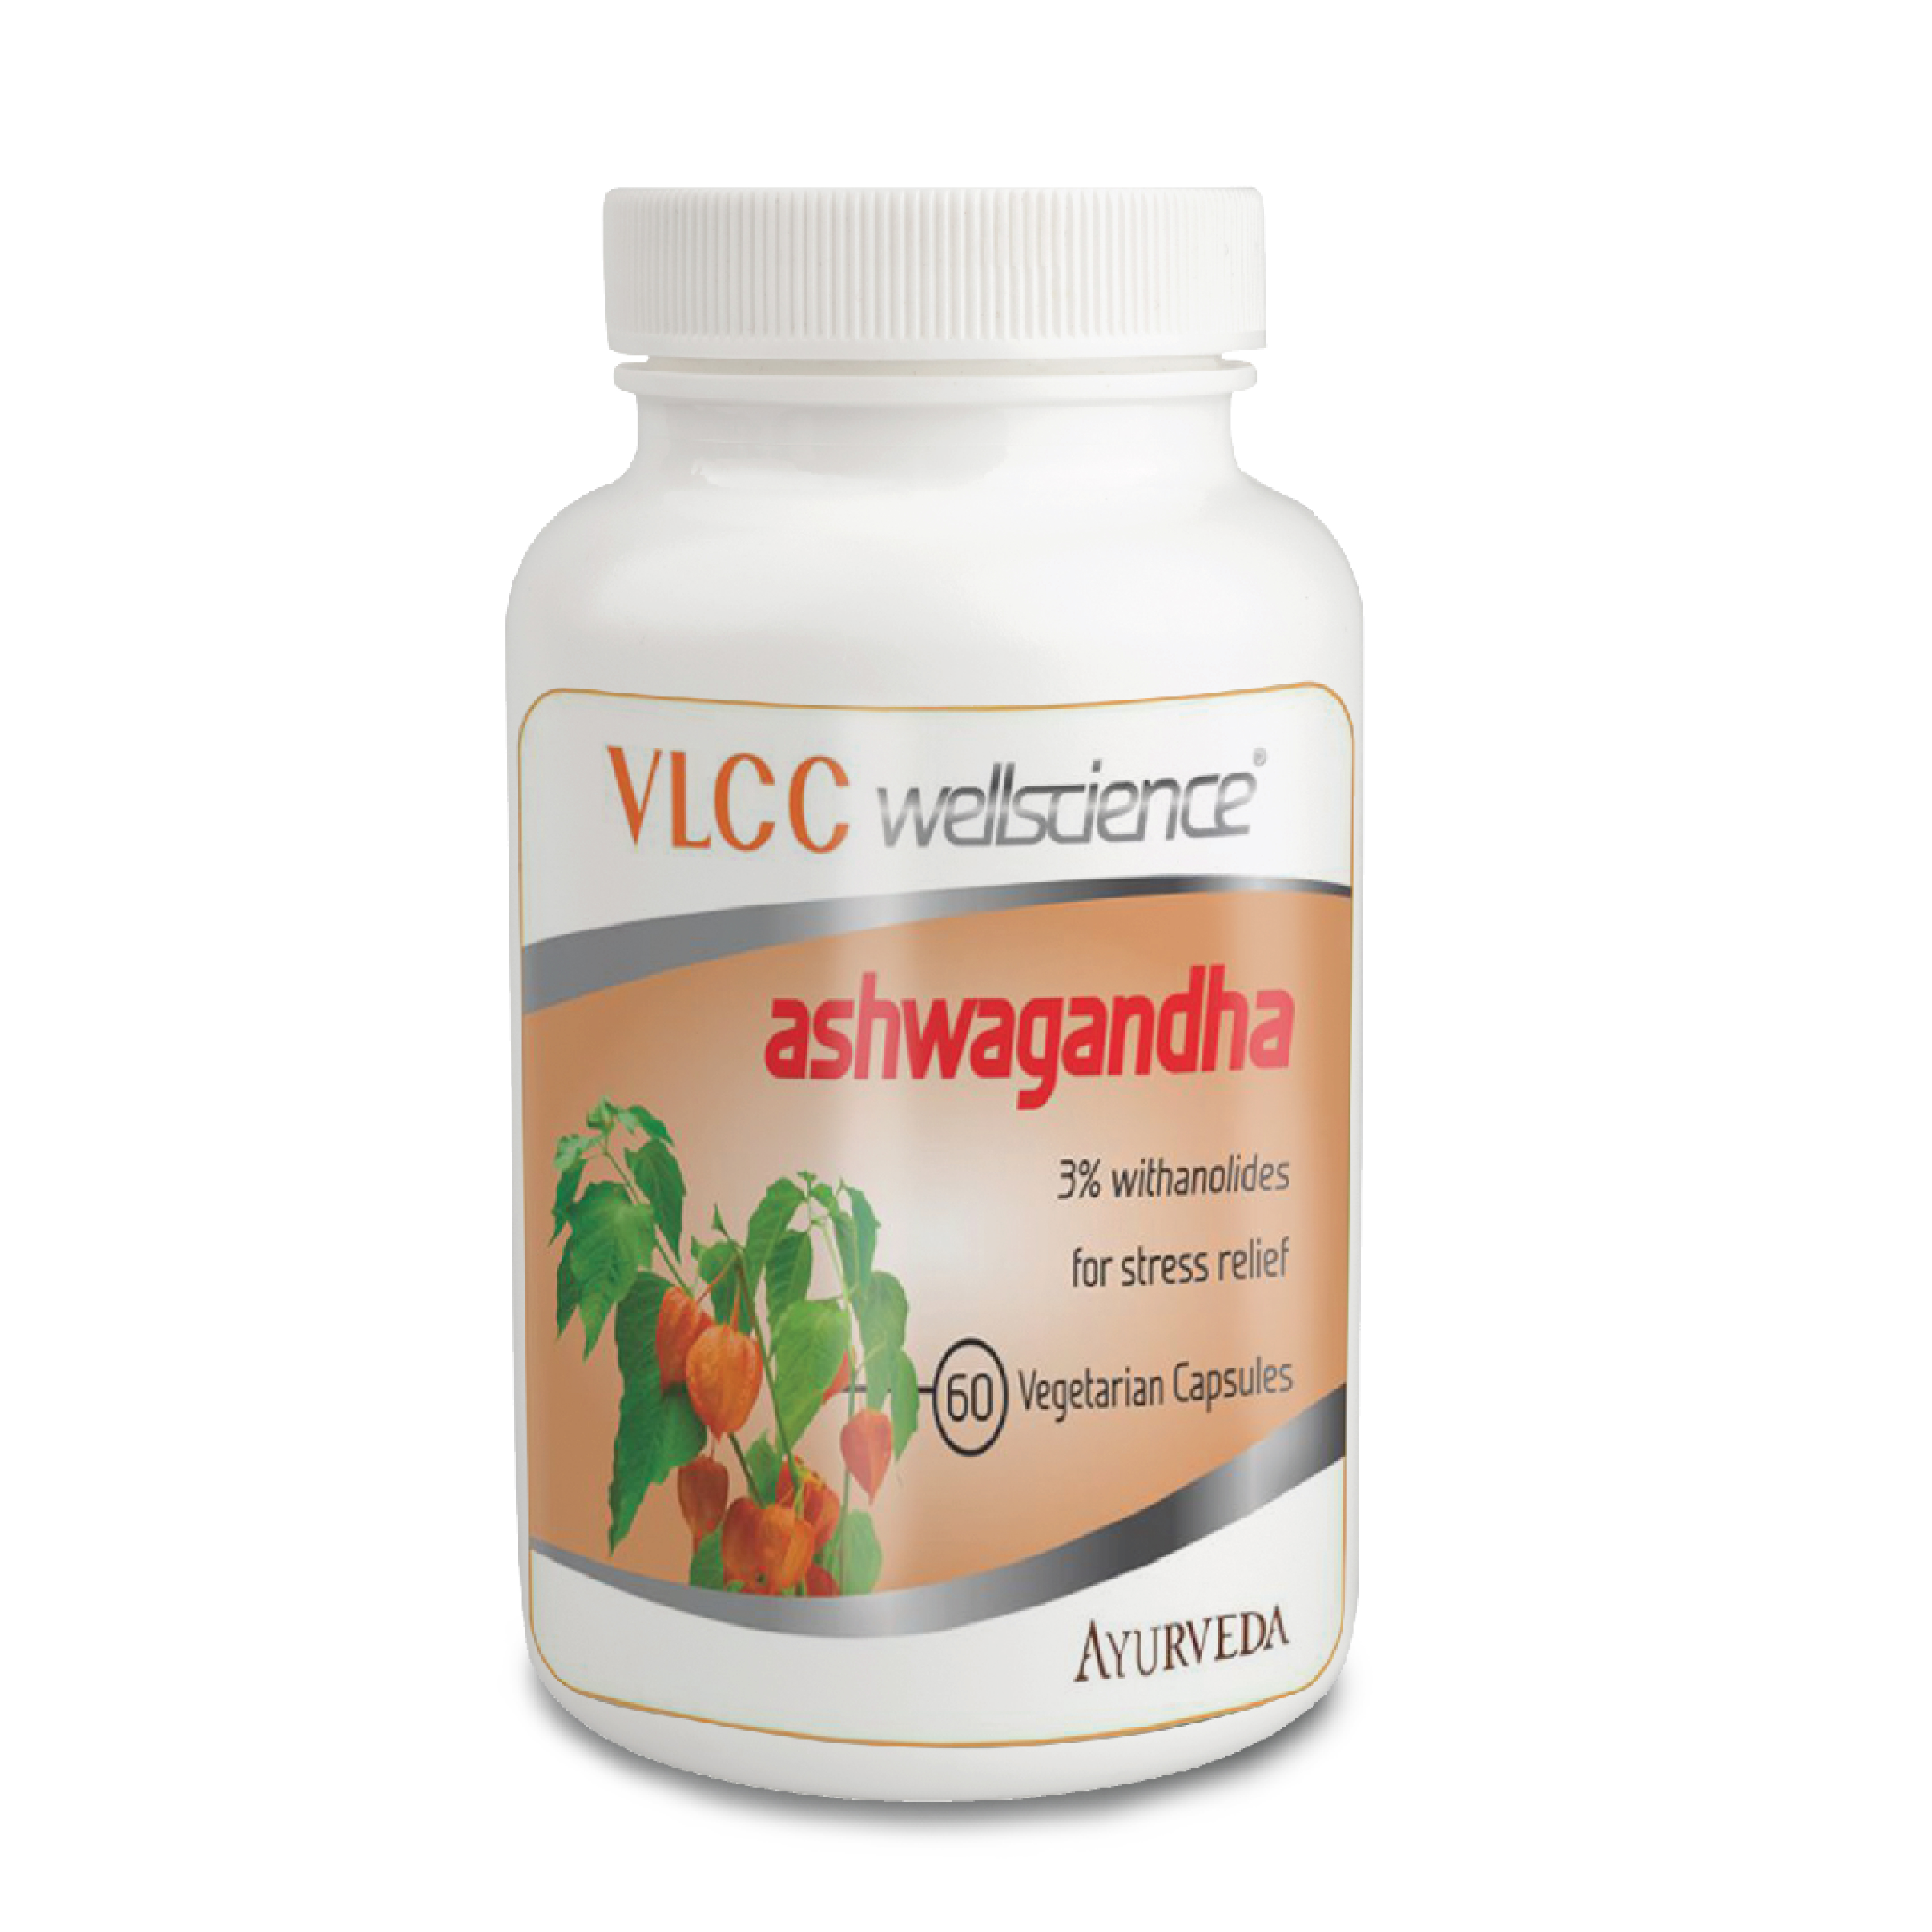 Vlcc Wellscience Ashwagandha for stress relief